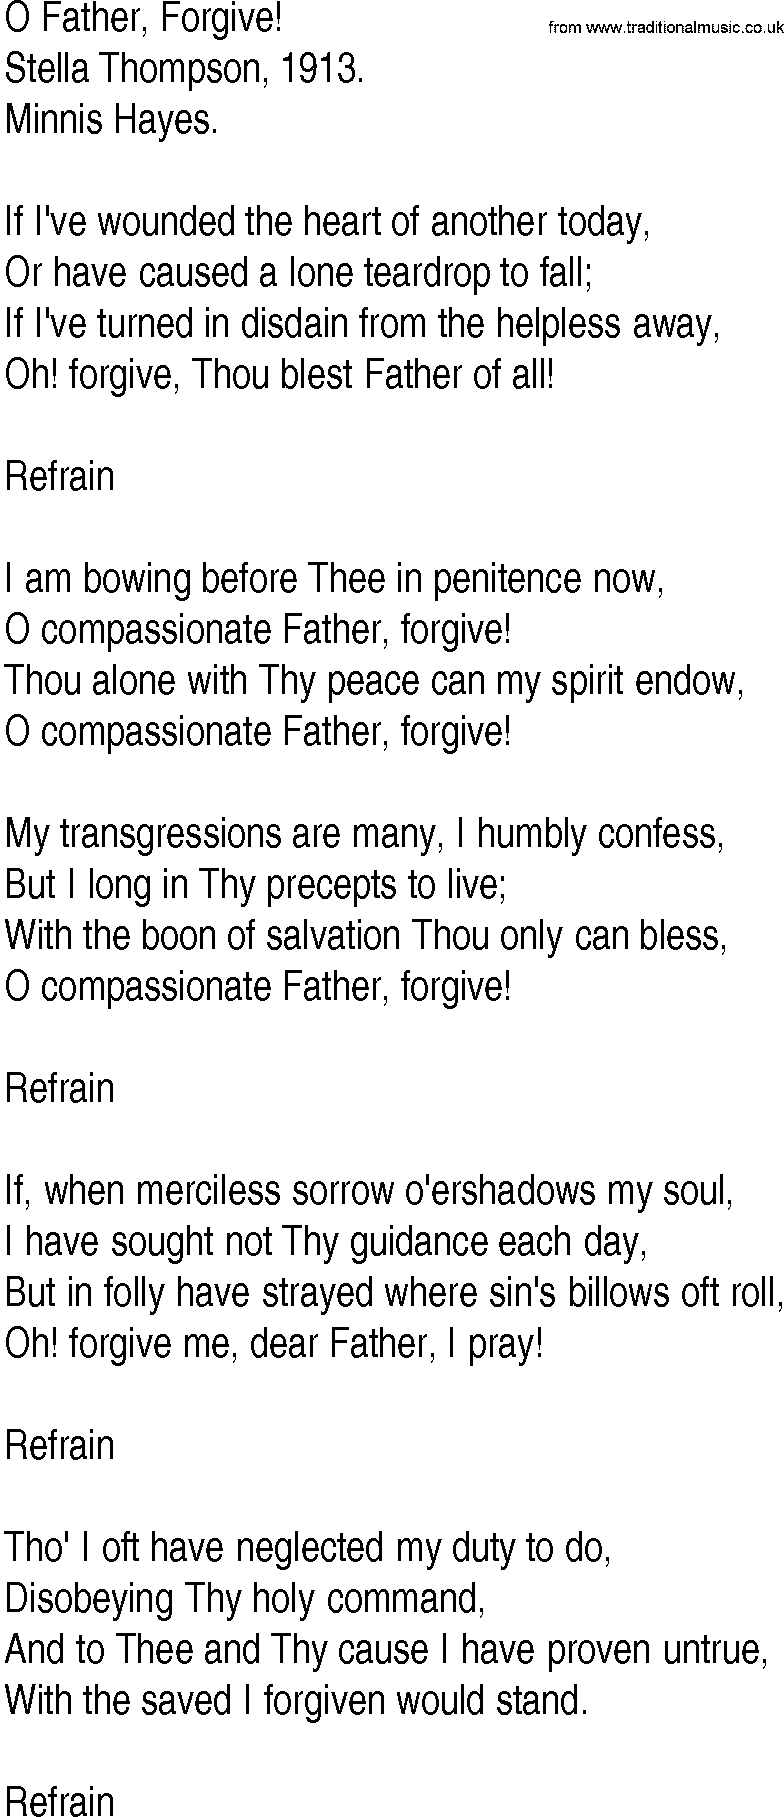 Hymn and Gospel Song: O Father, Forgive! by Stella Thompson lyrics